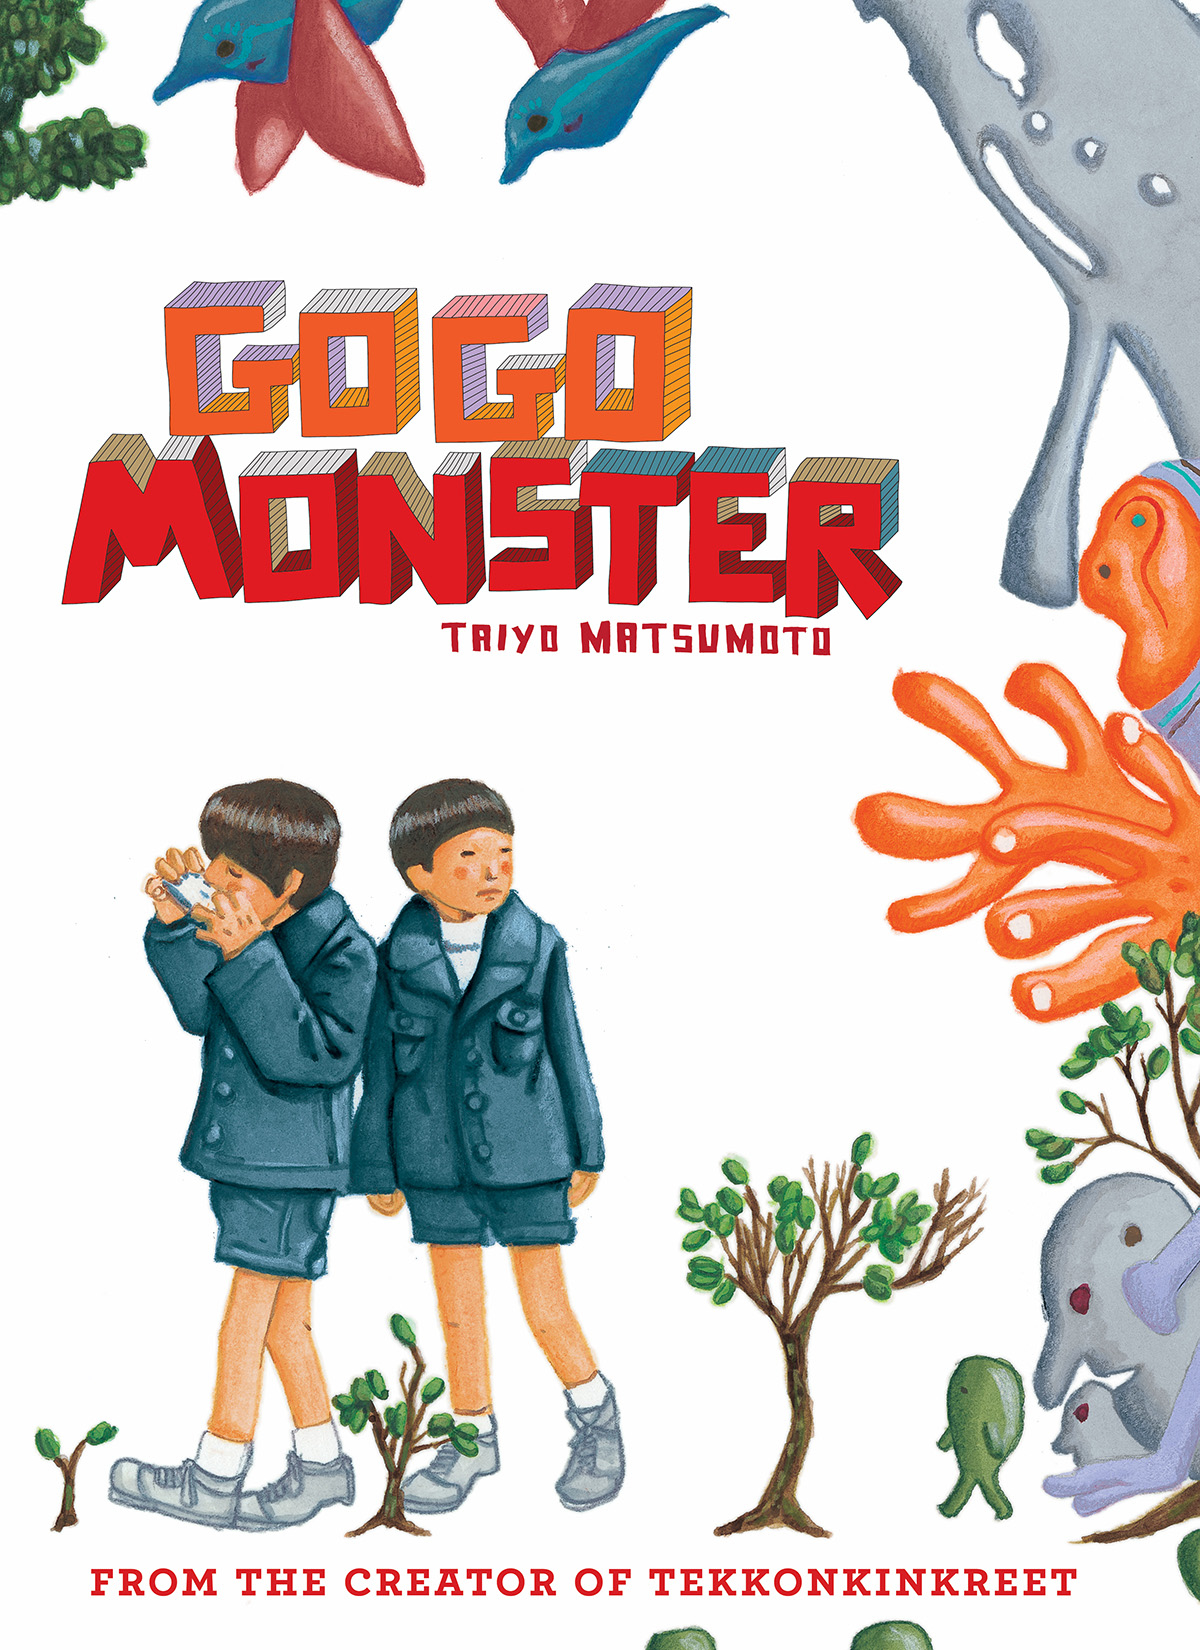 Gogo Monster Hardcover Manga Second Edition